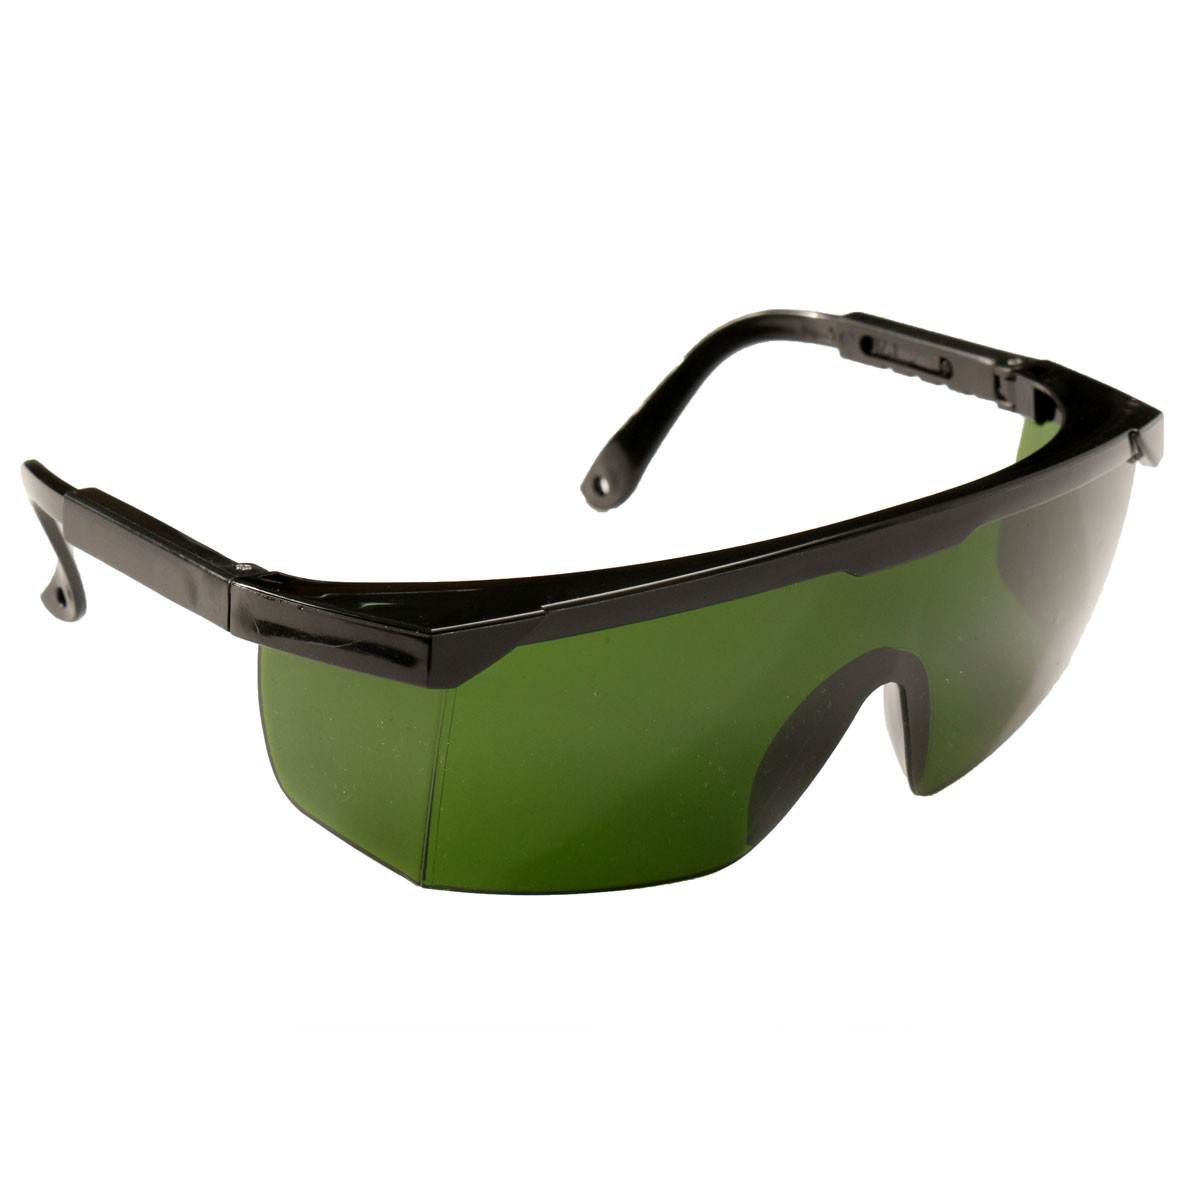 360nm-1064nm Laser Protection Goggles Glasses IPL-2 OD+4D For Laser 11